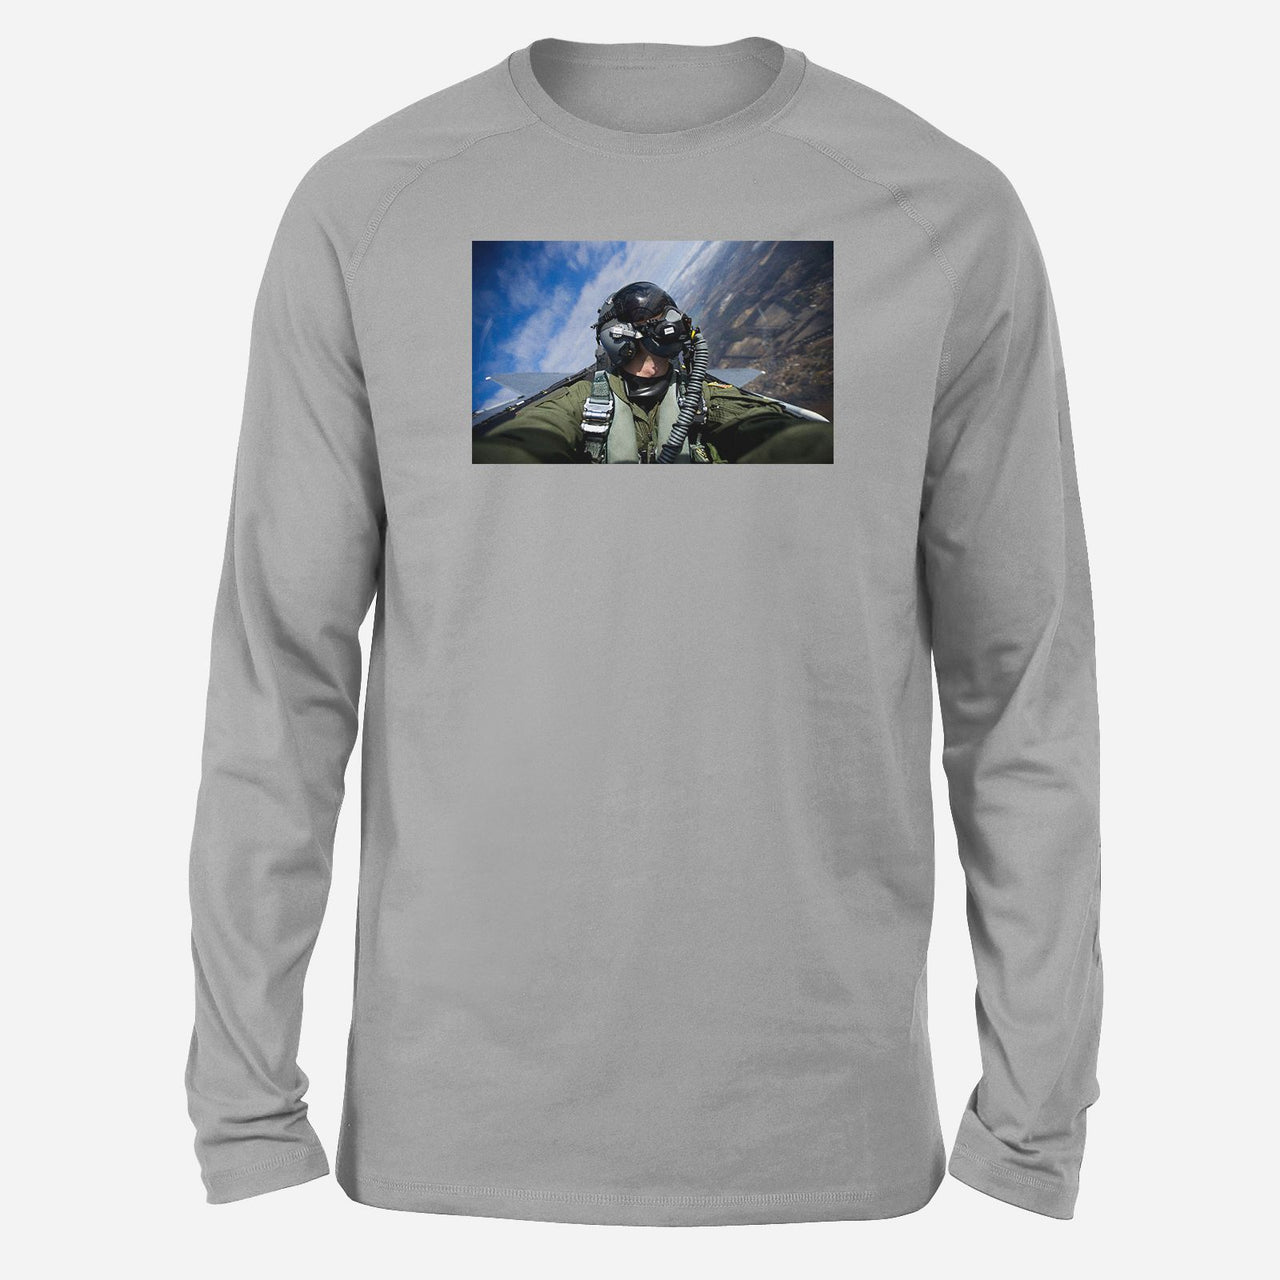 Amazing Military Pilot Selfie Designed Long-Sleeve T-Shirts